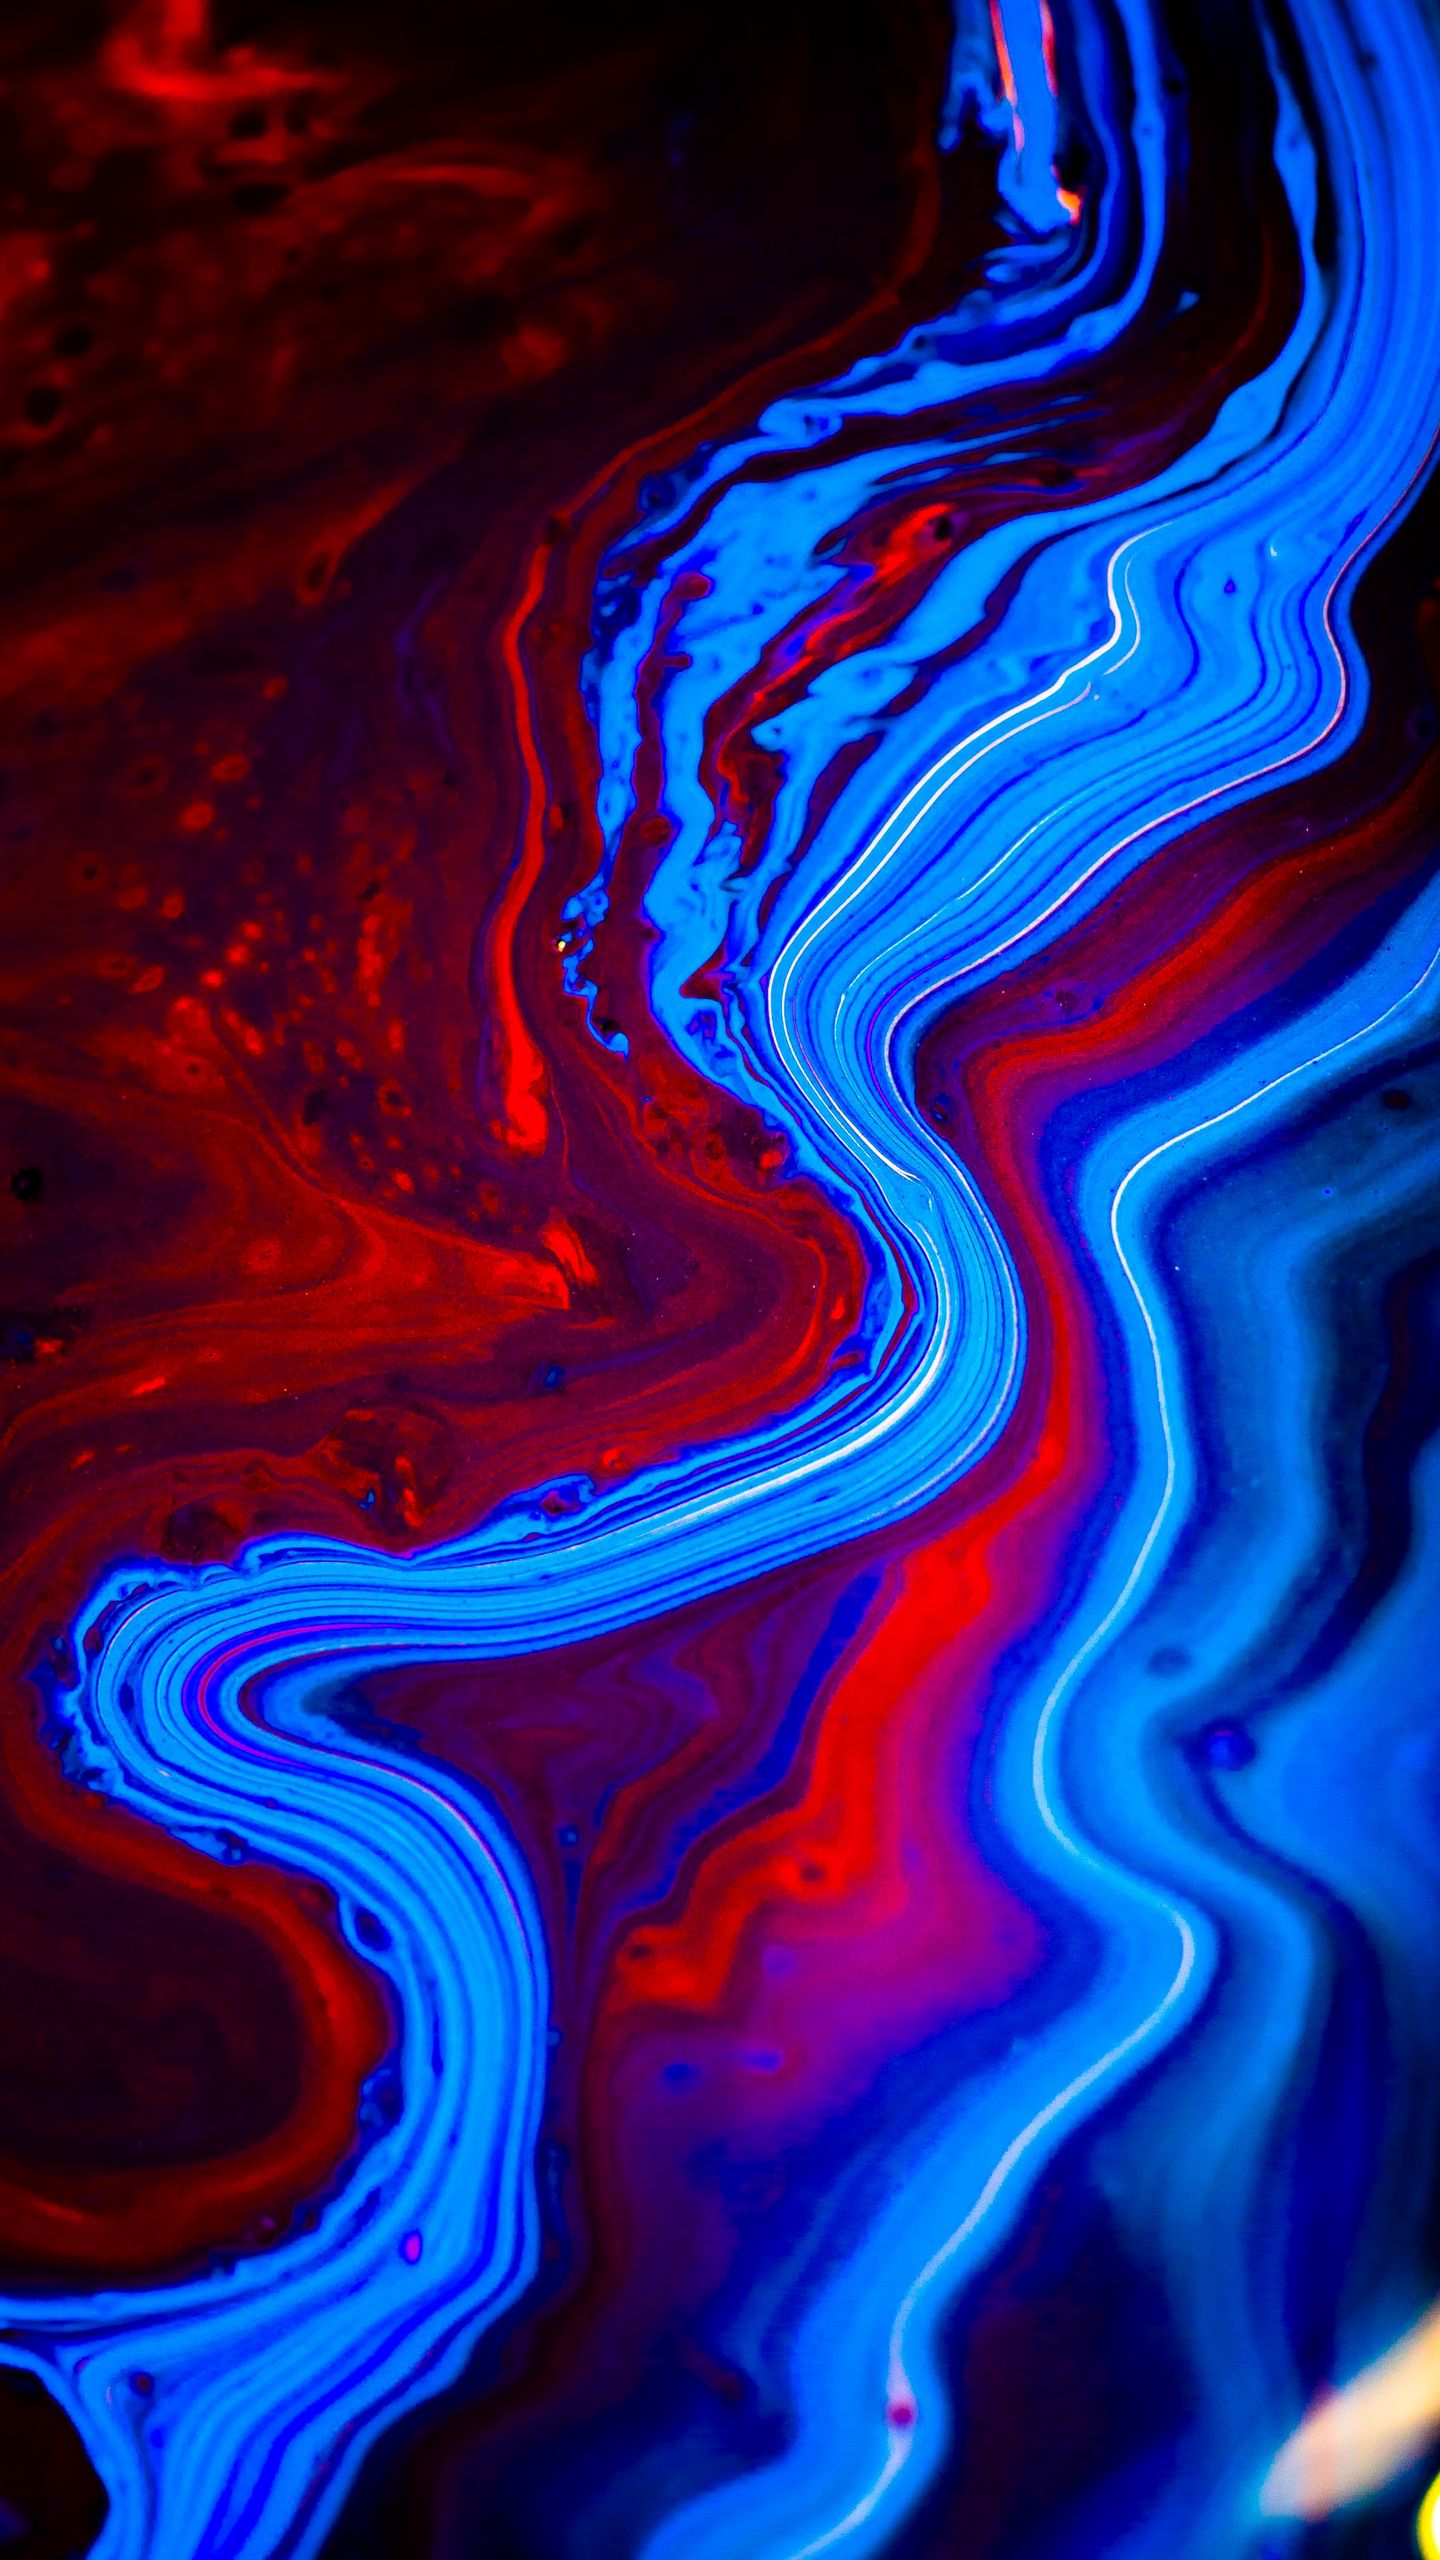 Download wallpaper 1440x2560 paint, liquid, fluid art, stains, distortion, red, blue qhd samsung galaxy s s edge, note, lg g4 HD background